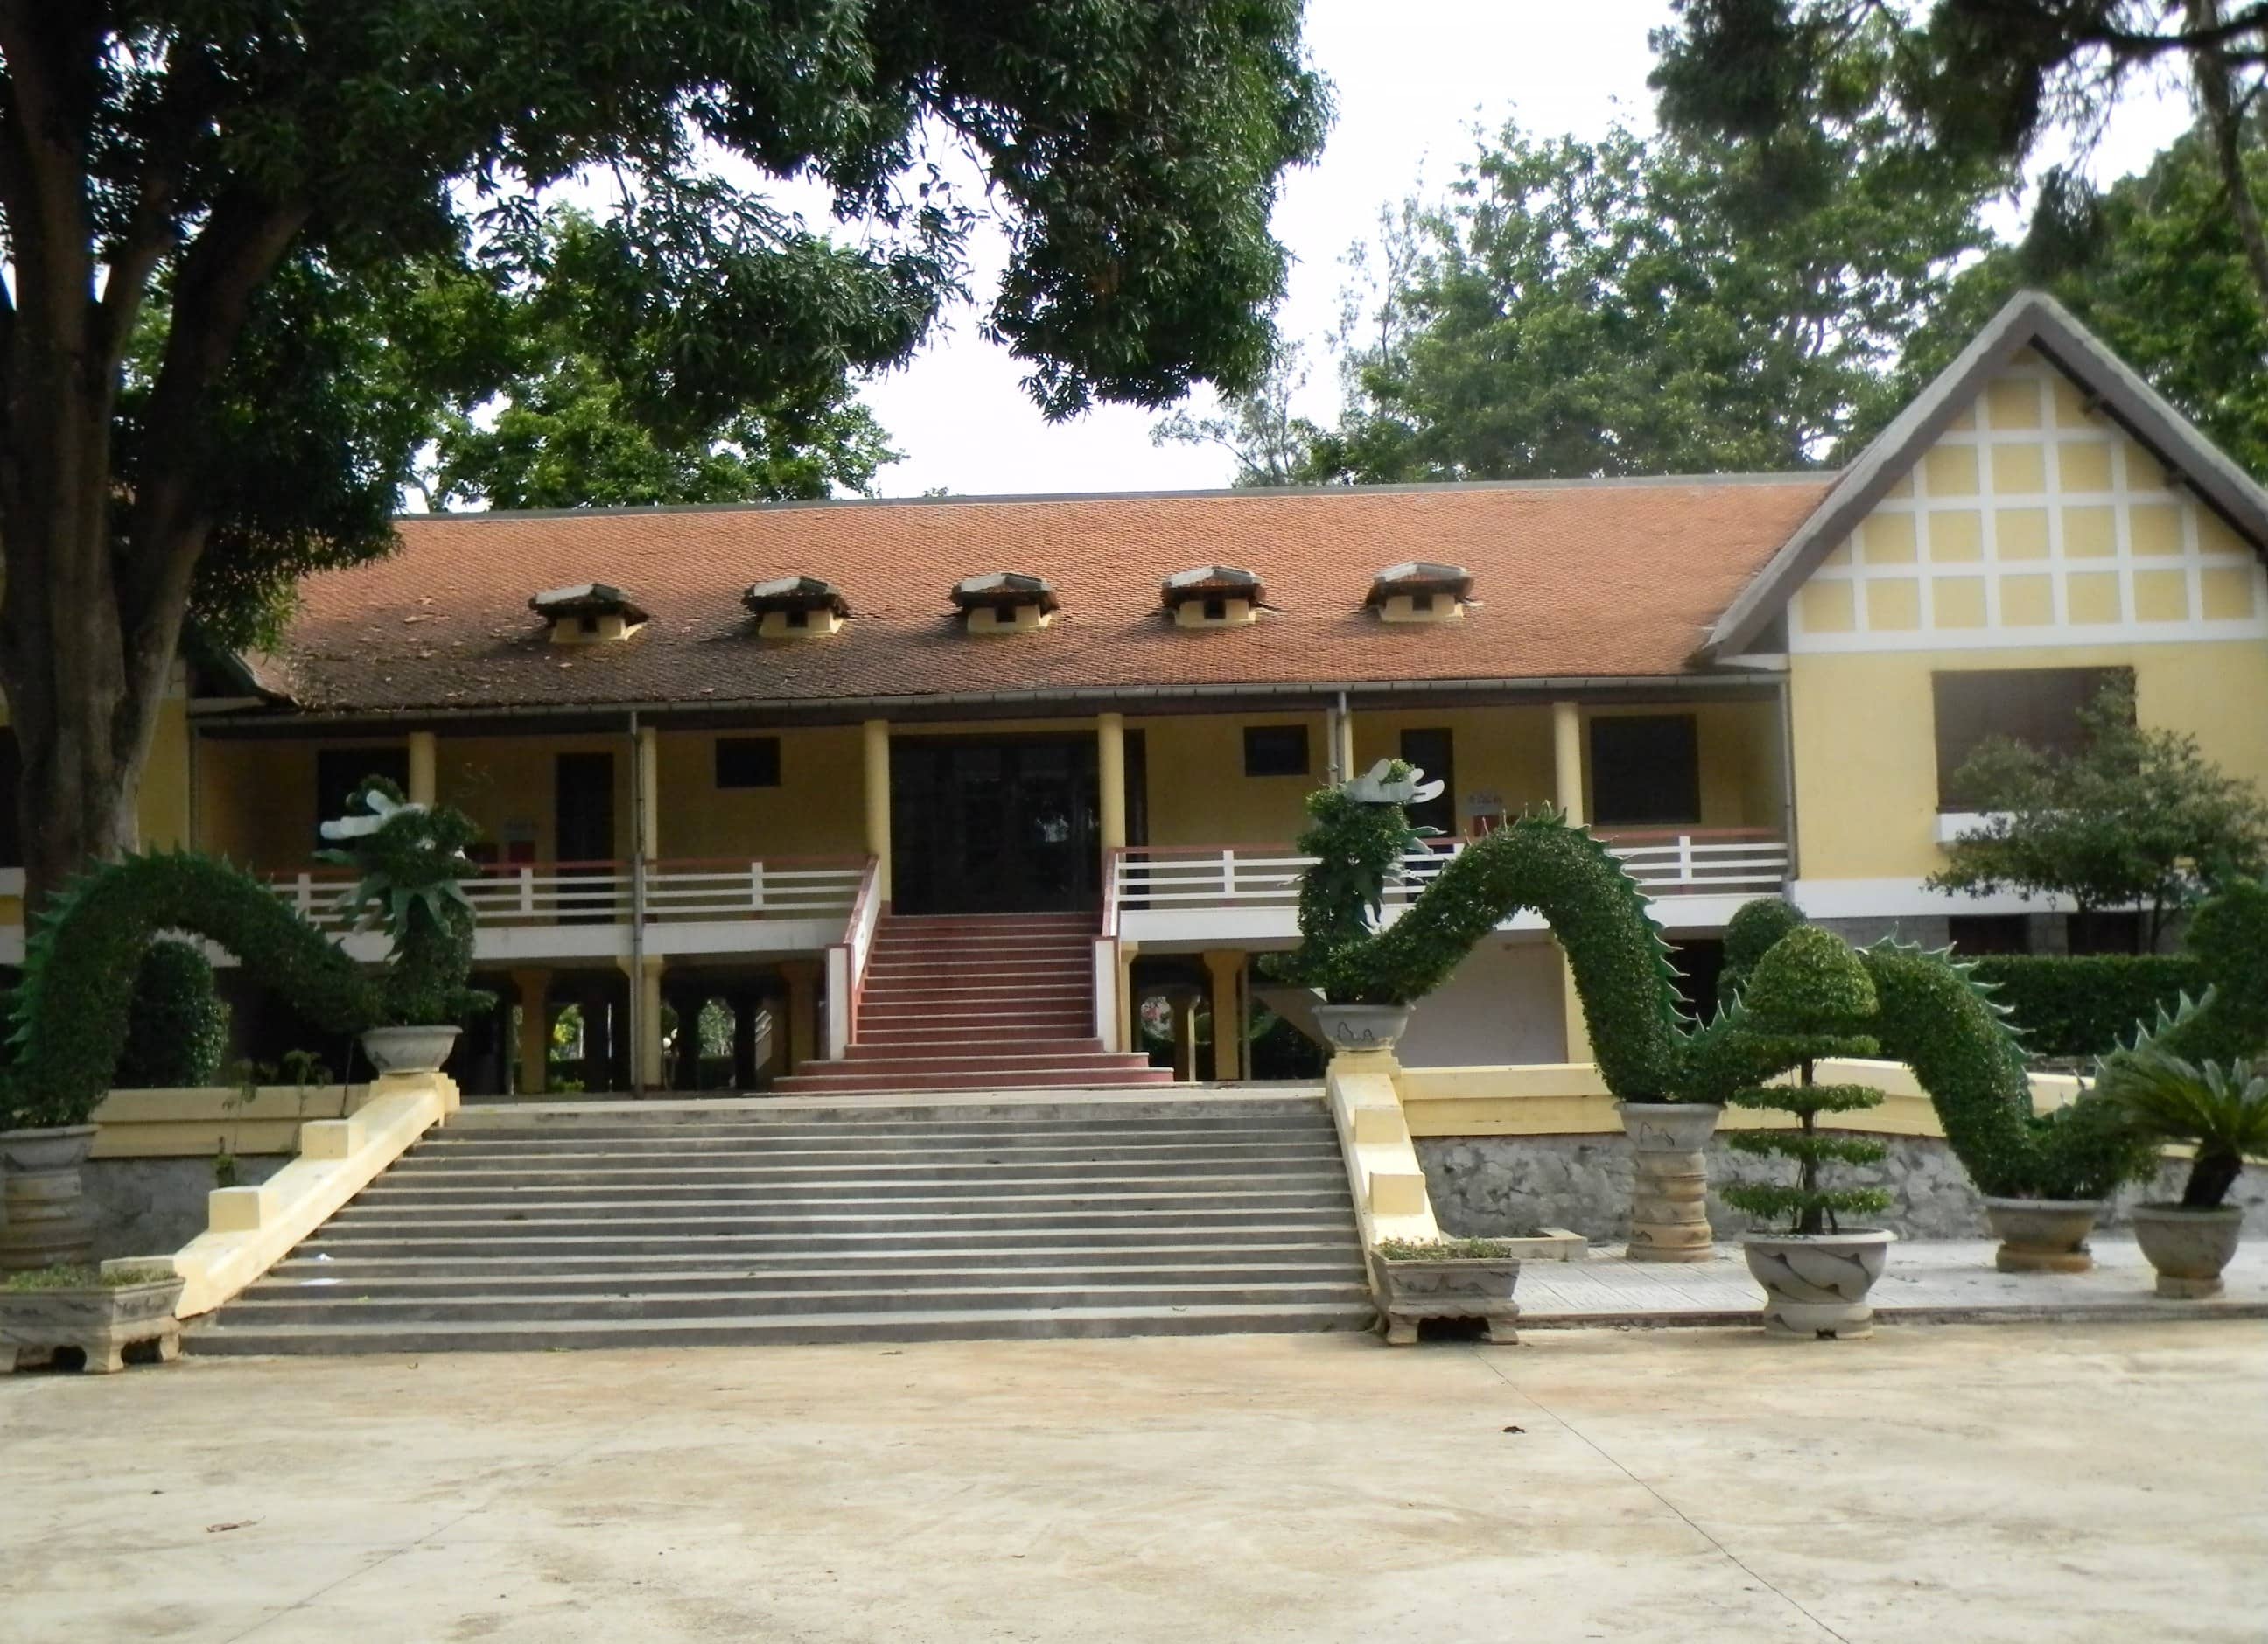 BAO DAI'S PALACE